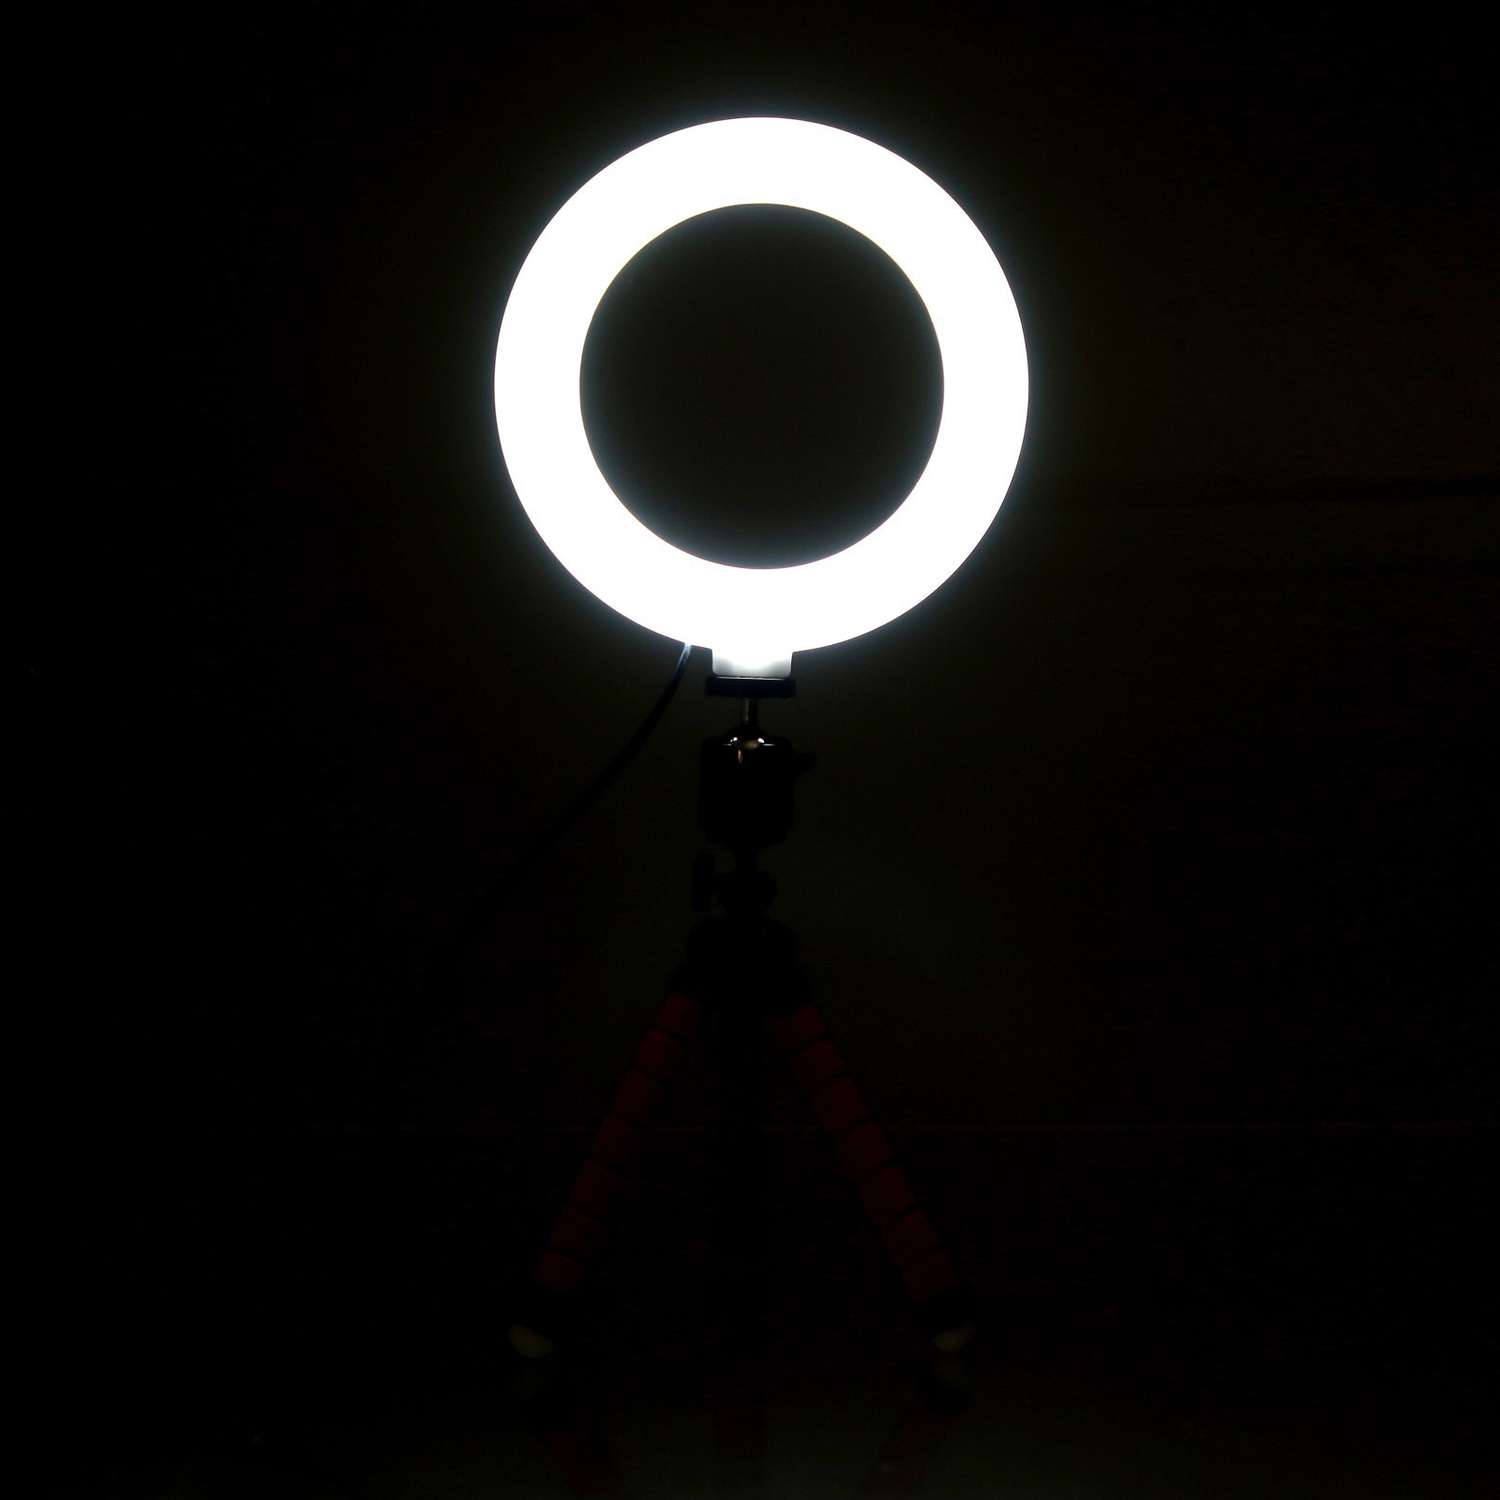 Кольцевая лампа Школа Талантов набор для съёмок видео - фото 10